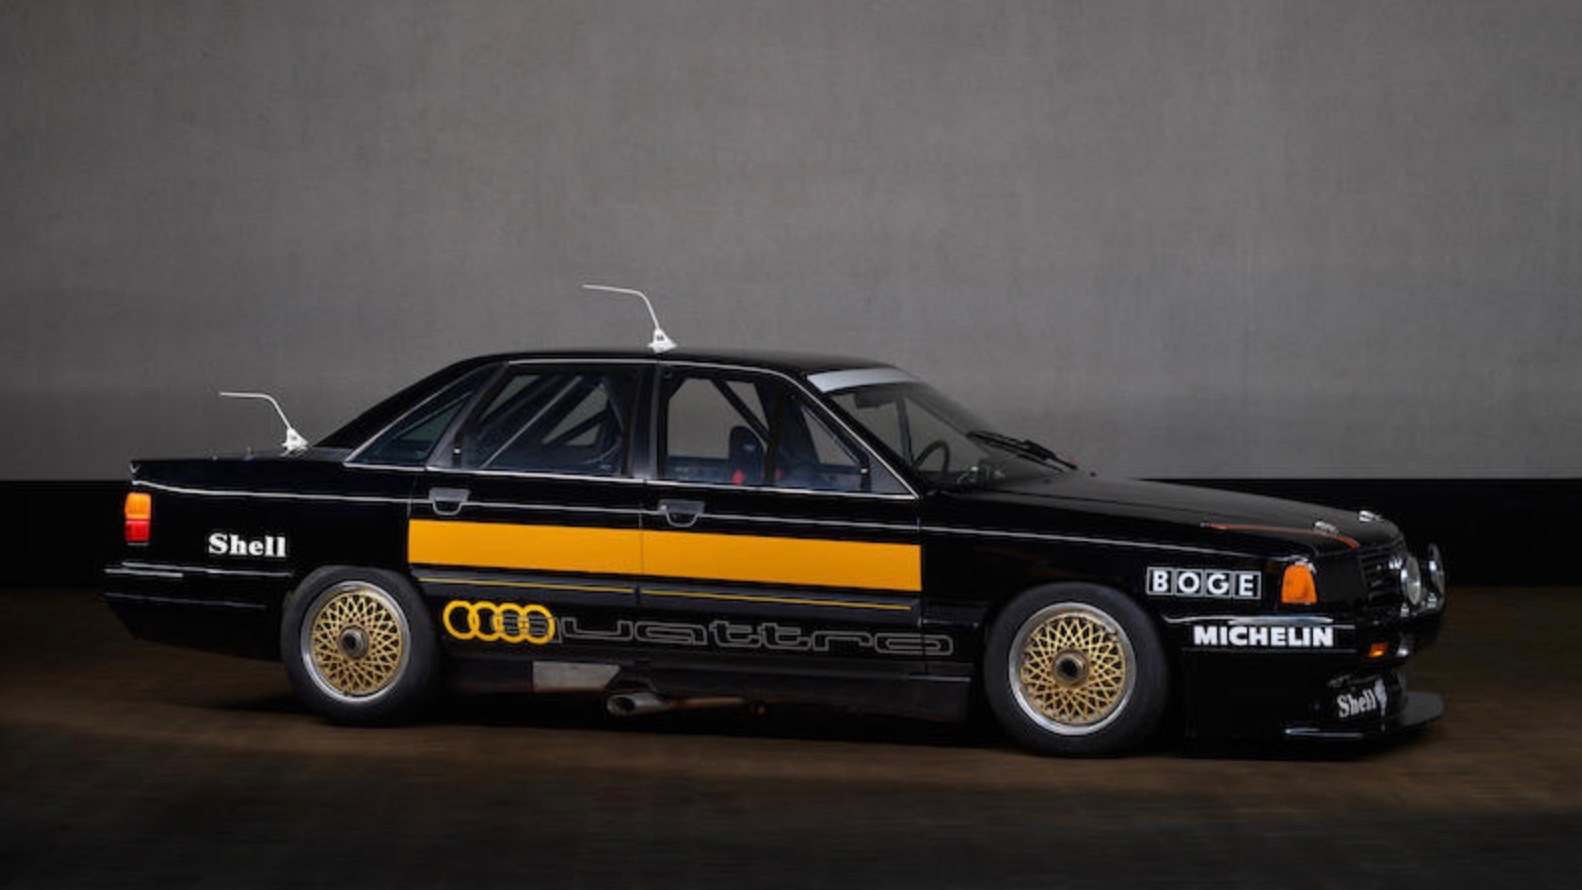 1988 Audi 200 Turbo Quattro Nardo 6000 speed record car (photo via Bonhams)